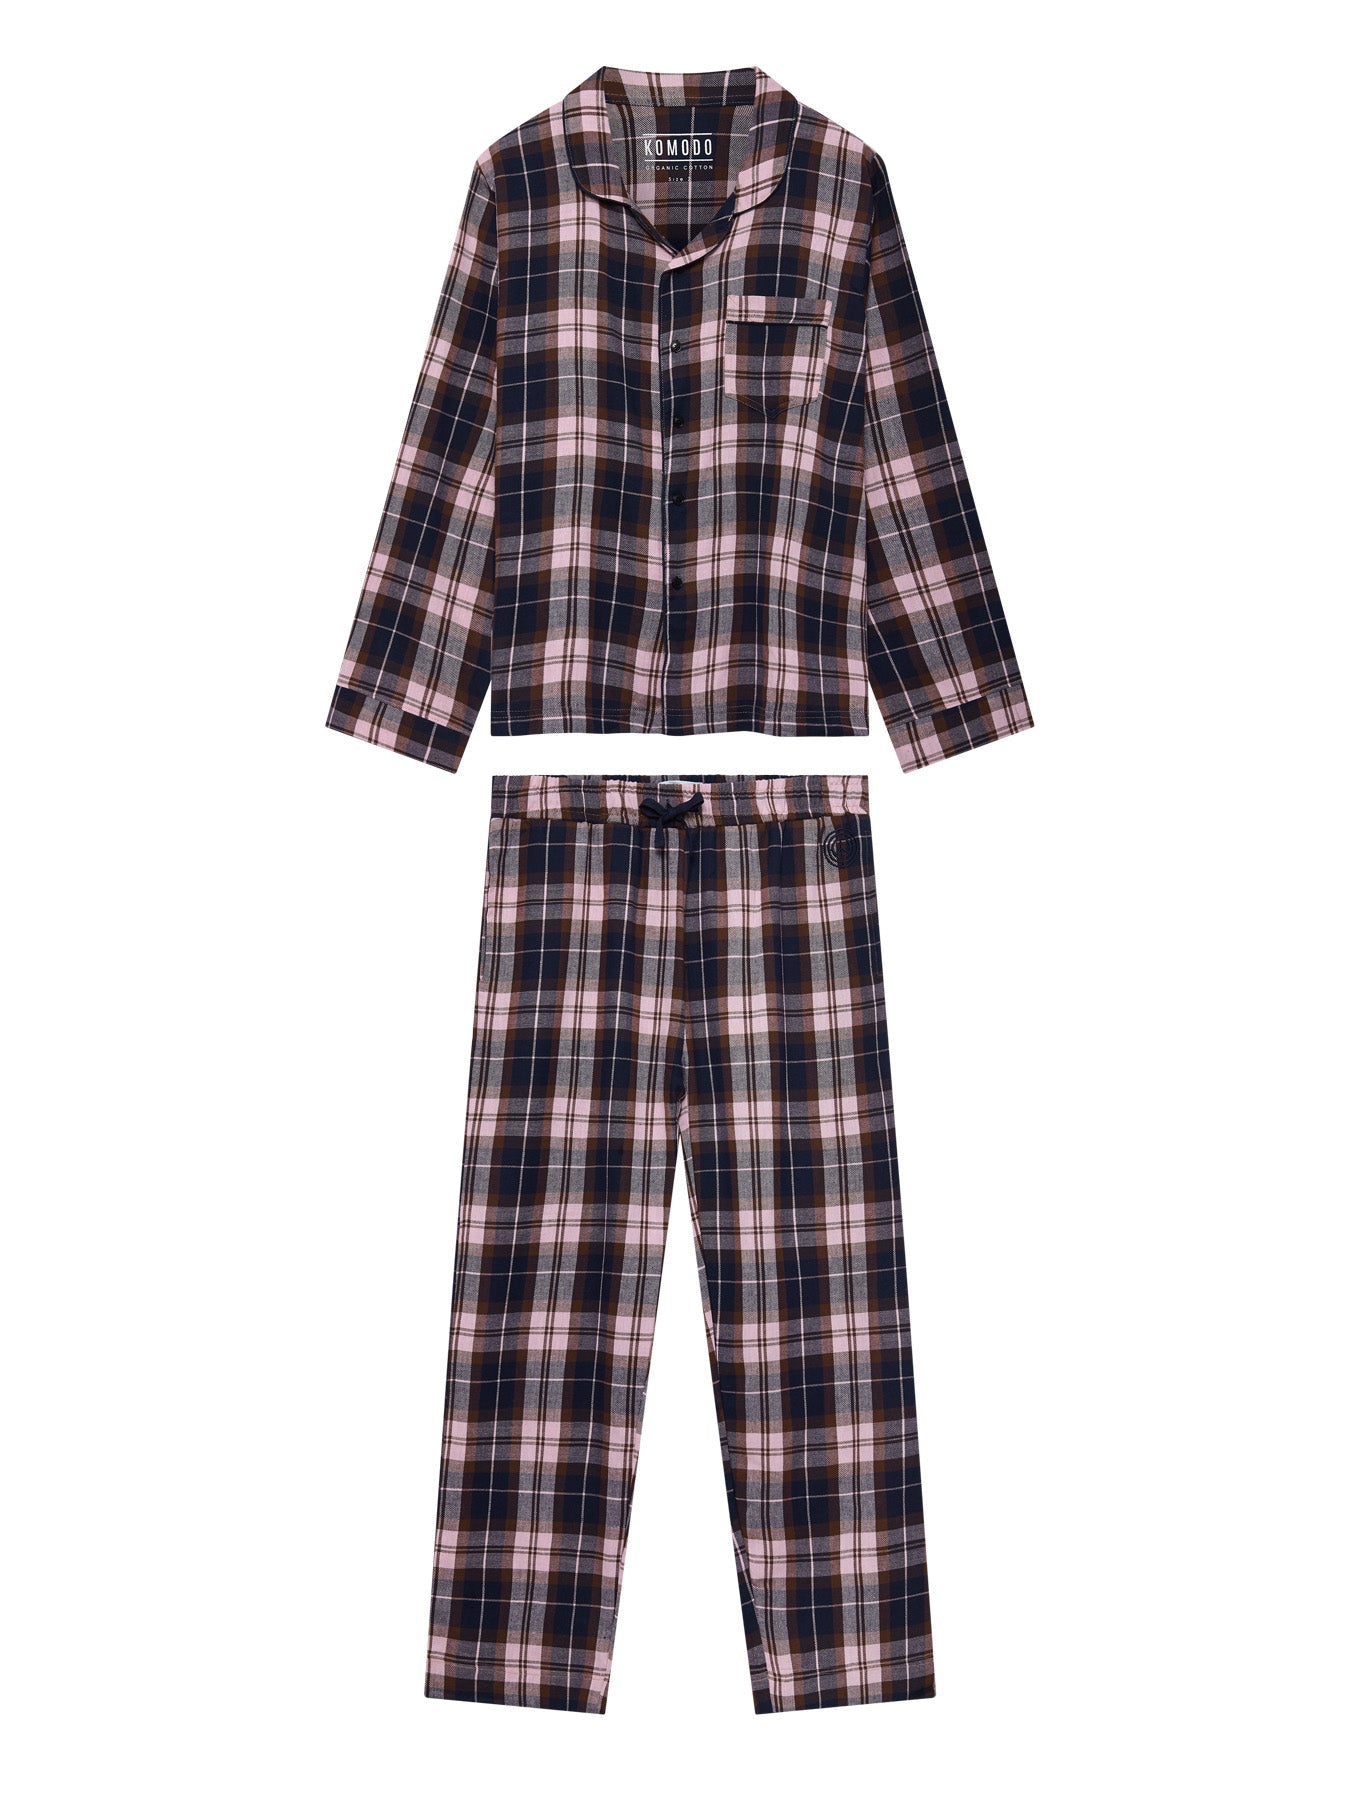 Ensemble pyjama mauve JIM JAM en coton 100% biologique de Komodo 